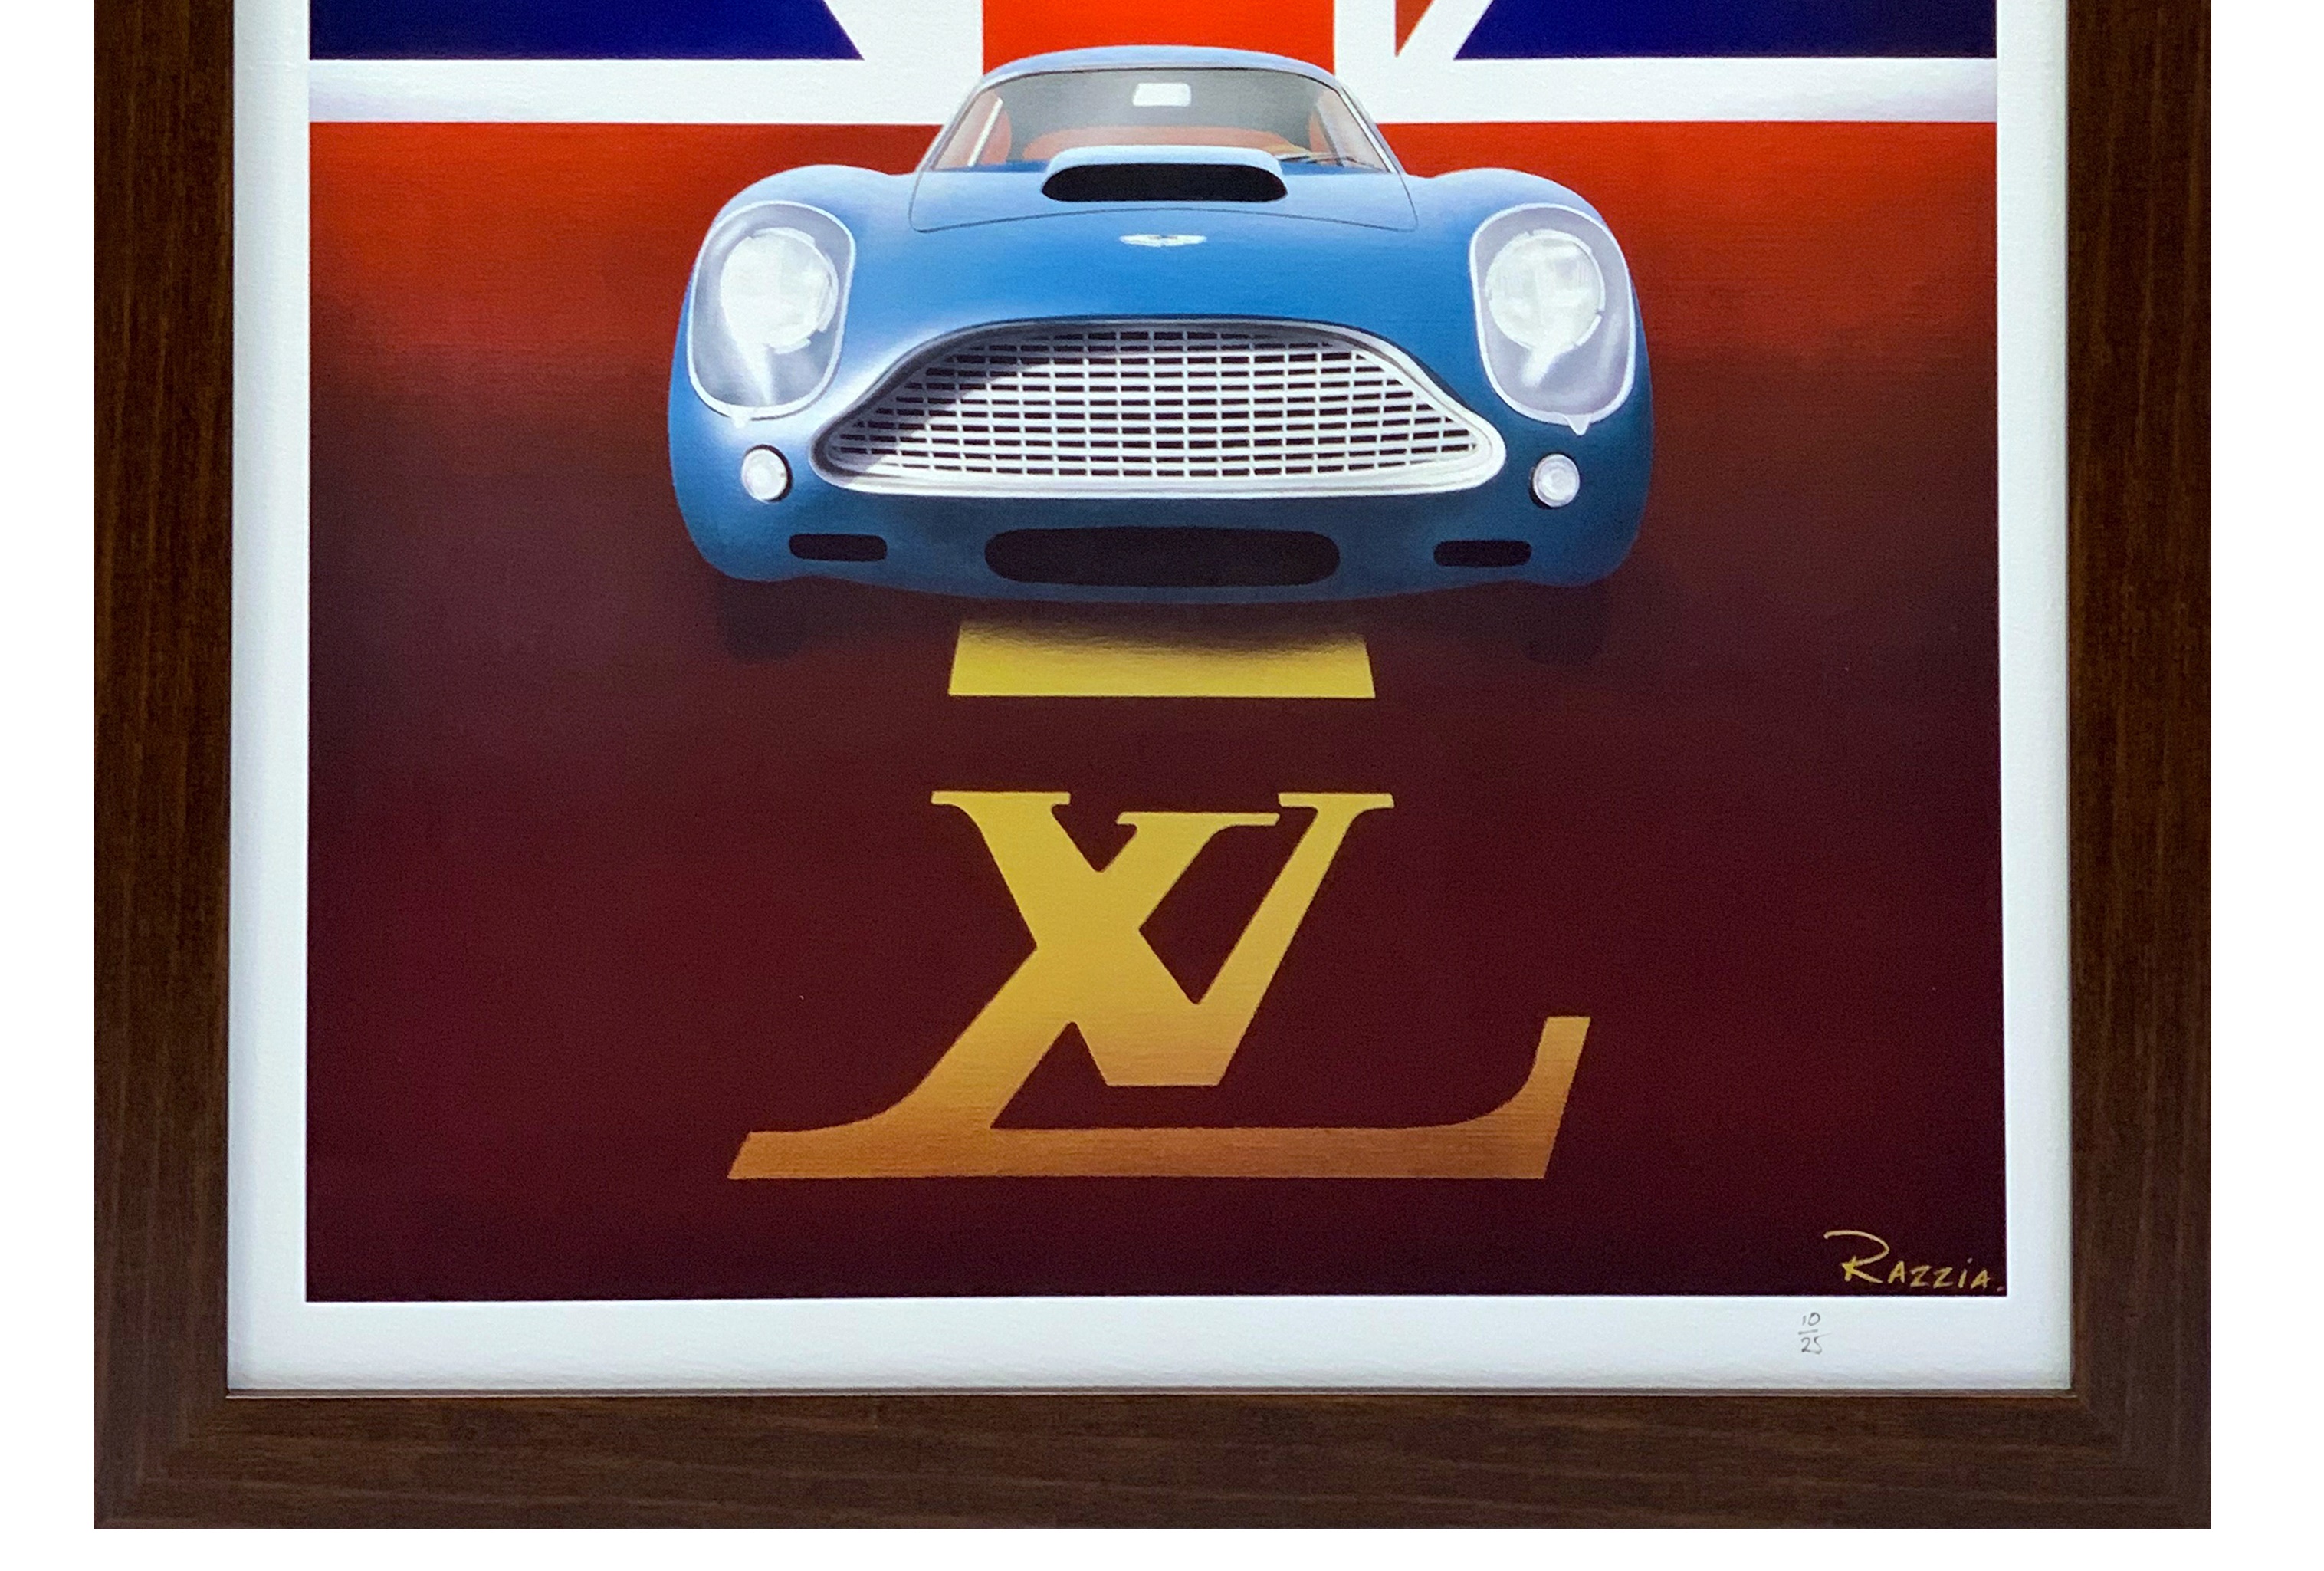 Bonhams Cars : A 2004 Louis Vuitton Classic poster featuring Aston Martin  DB4 GT Zagato